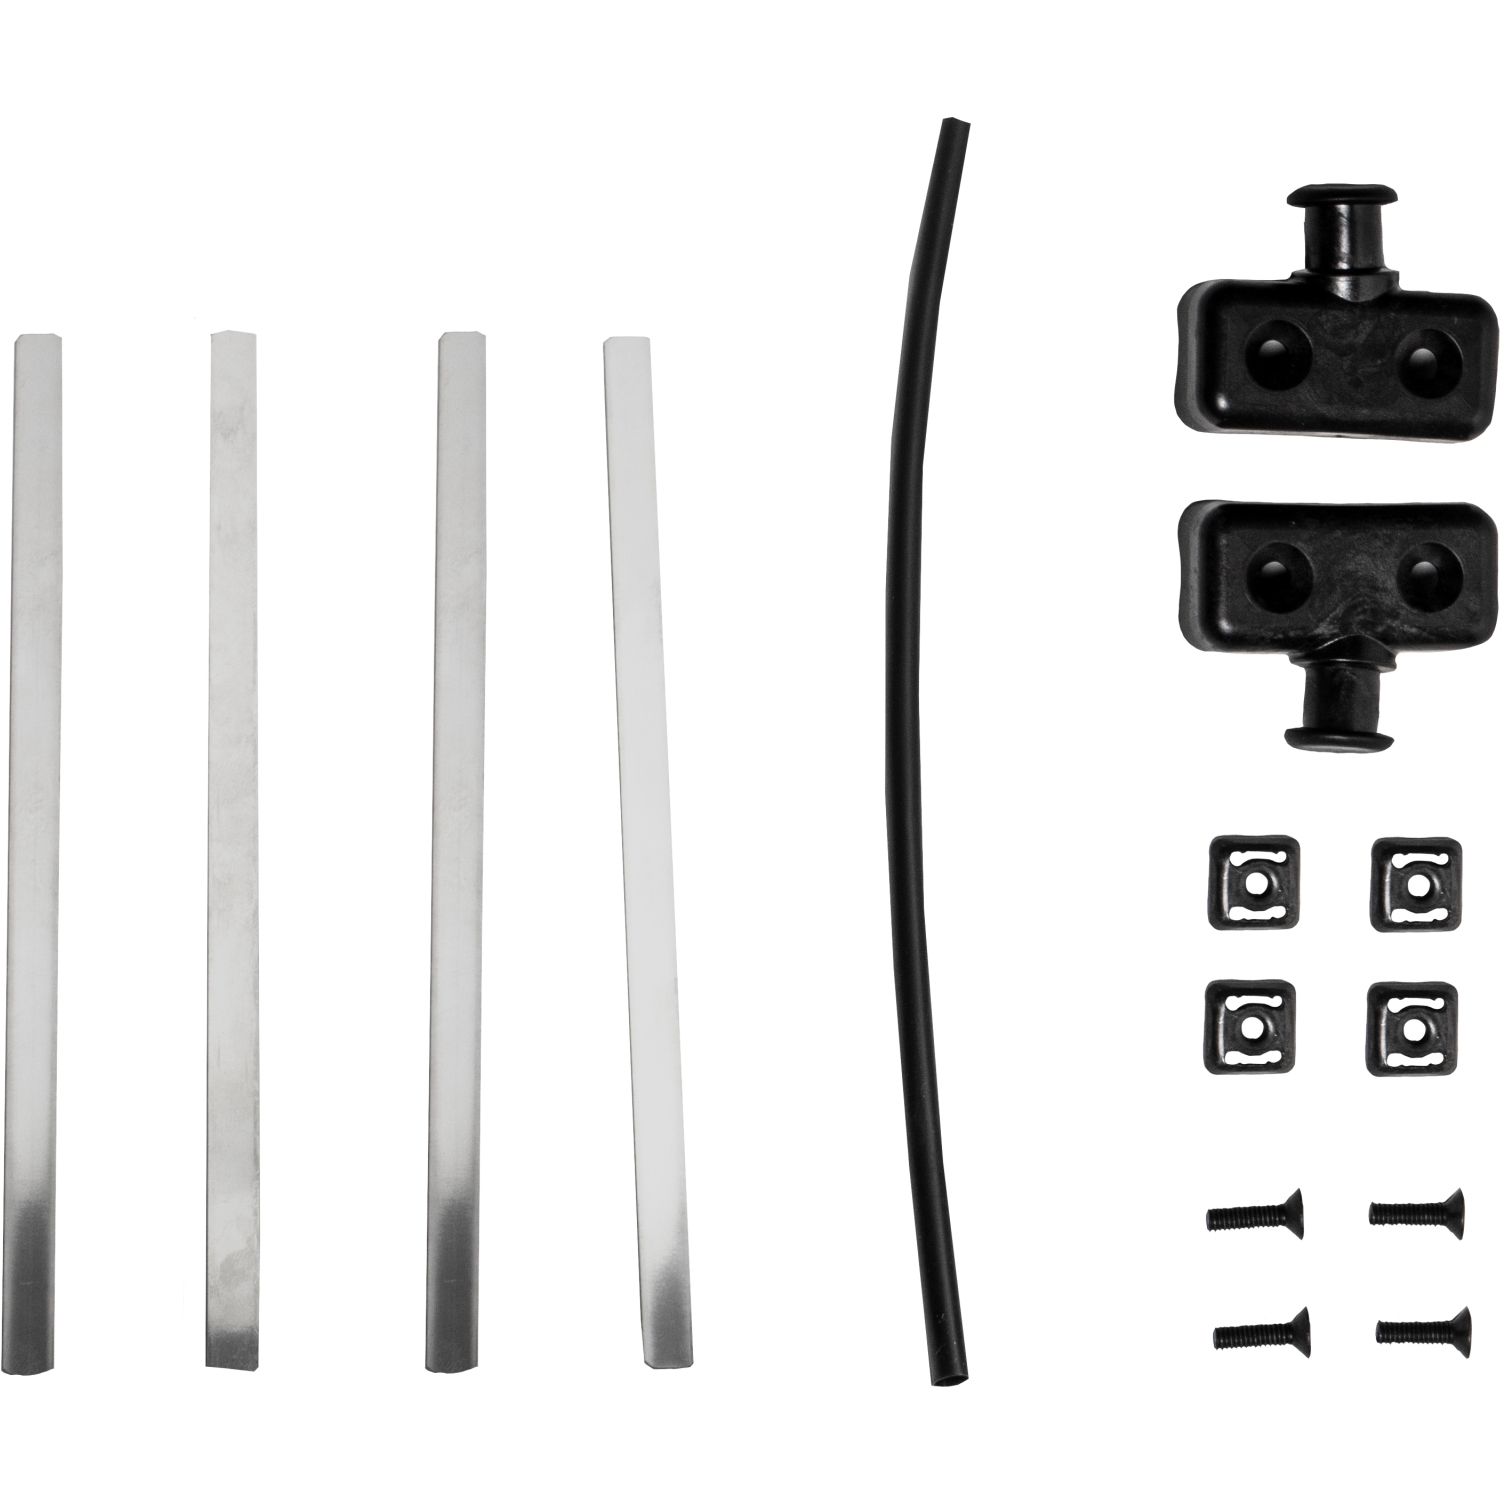 Productfoto van ORTLIEB Quick Rack Seat Stay Adapter - black